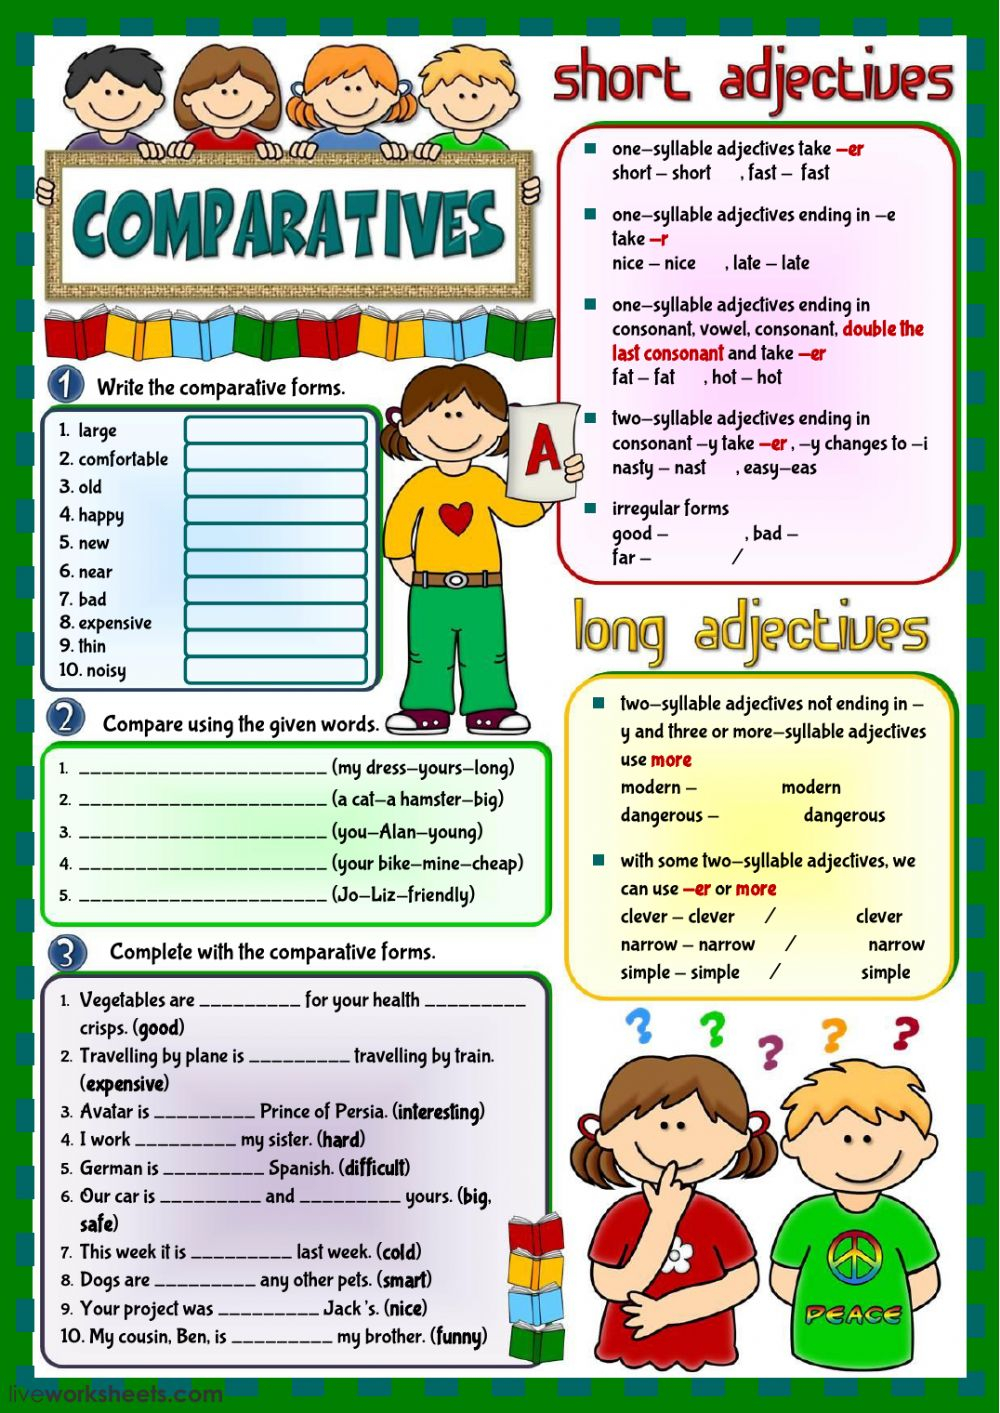 Comparatives Revision Worksheet